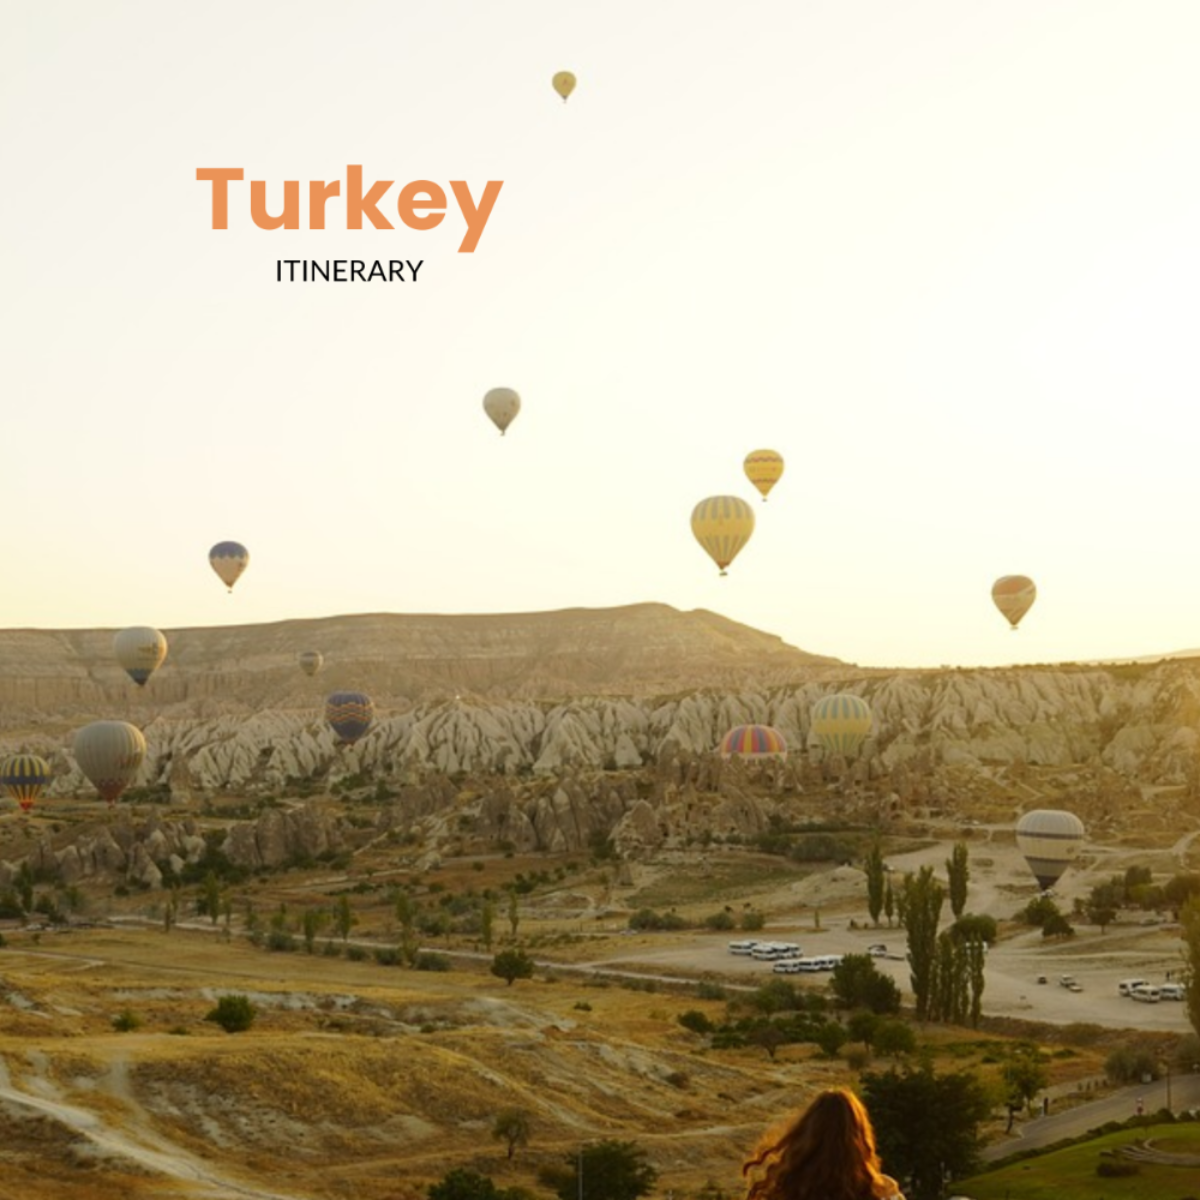 Turkey Itinerary Template